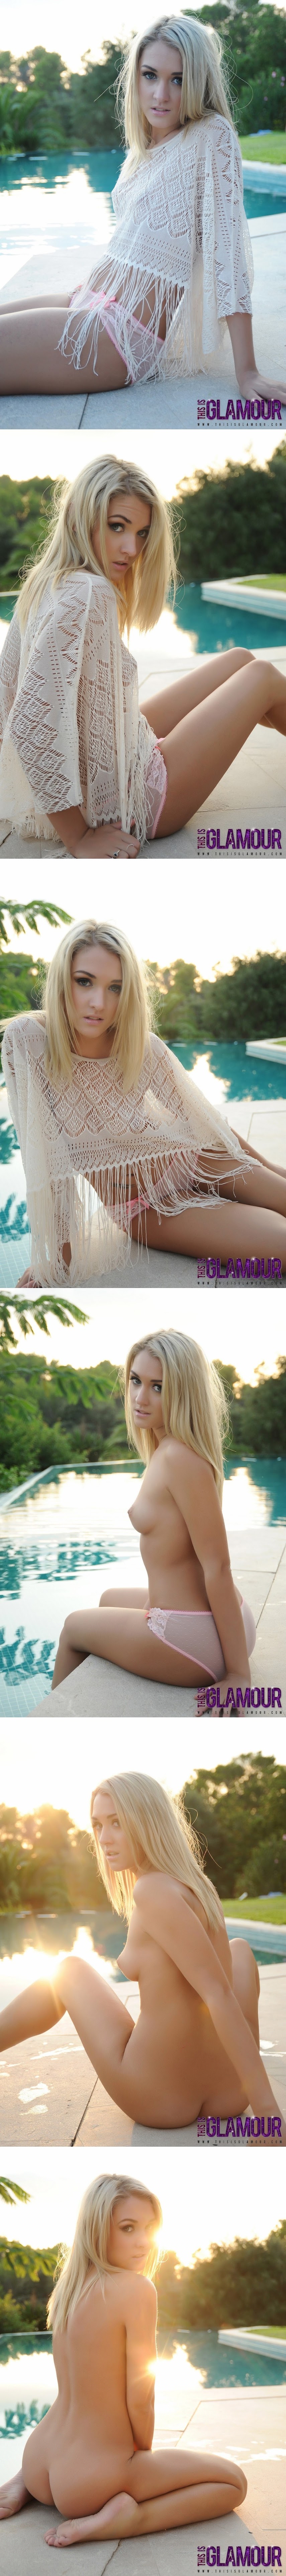 Charlotte_Markham__039_s_Pretty_Pink_Bikini.zip-jk- Charlotte Markham stips nude by the pool